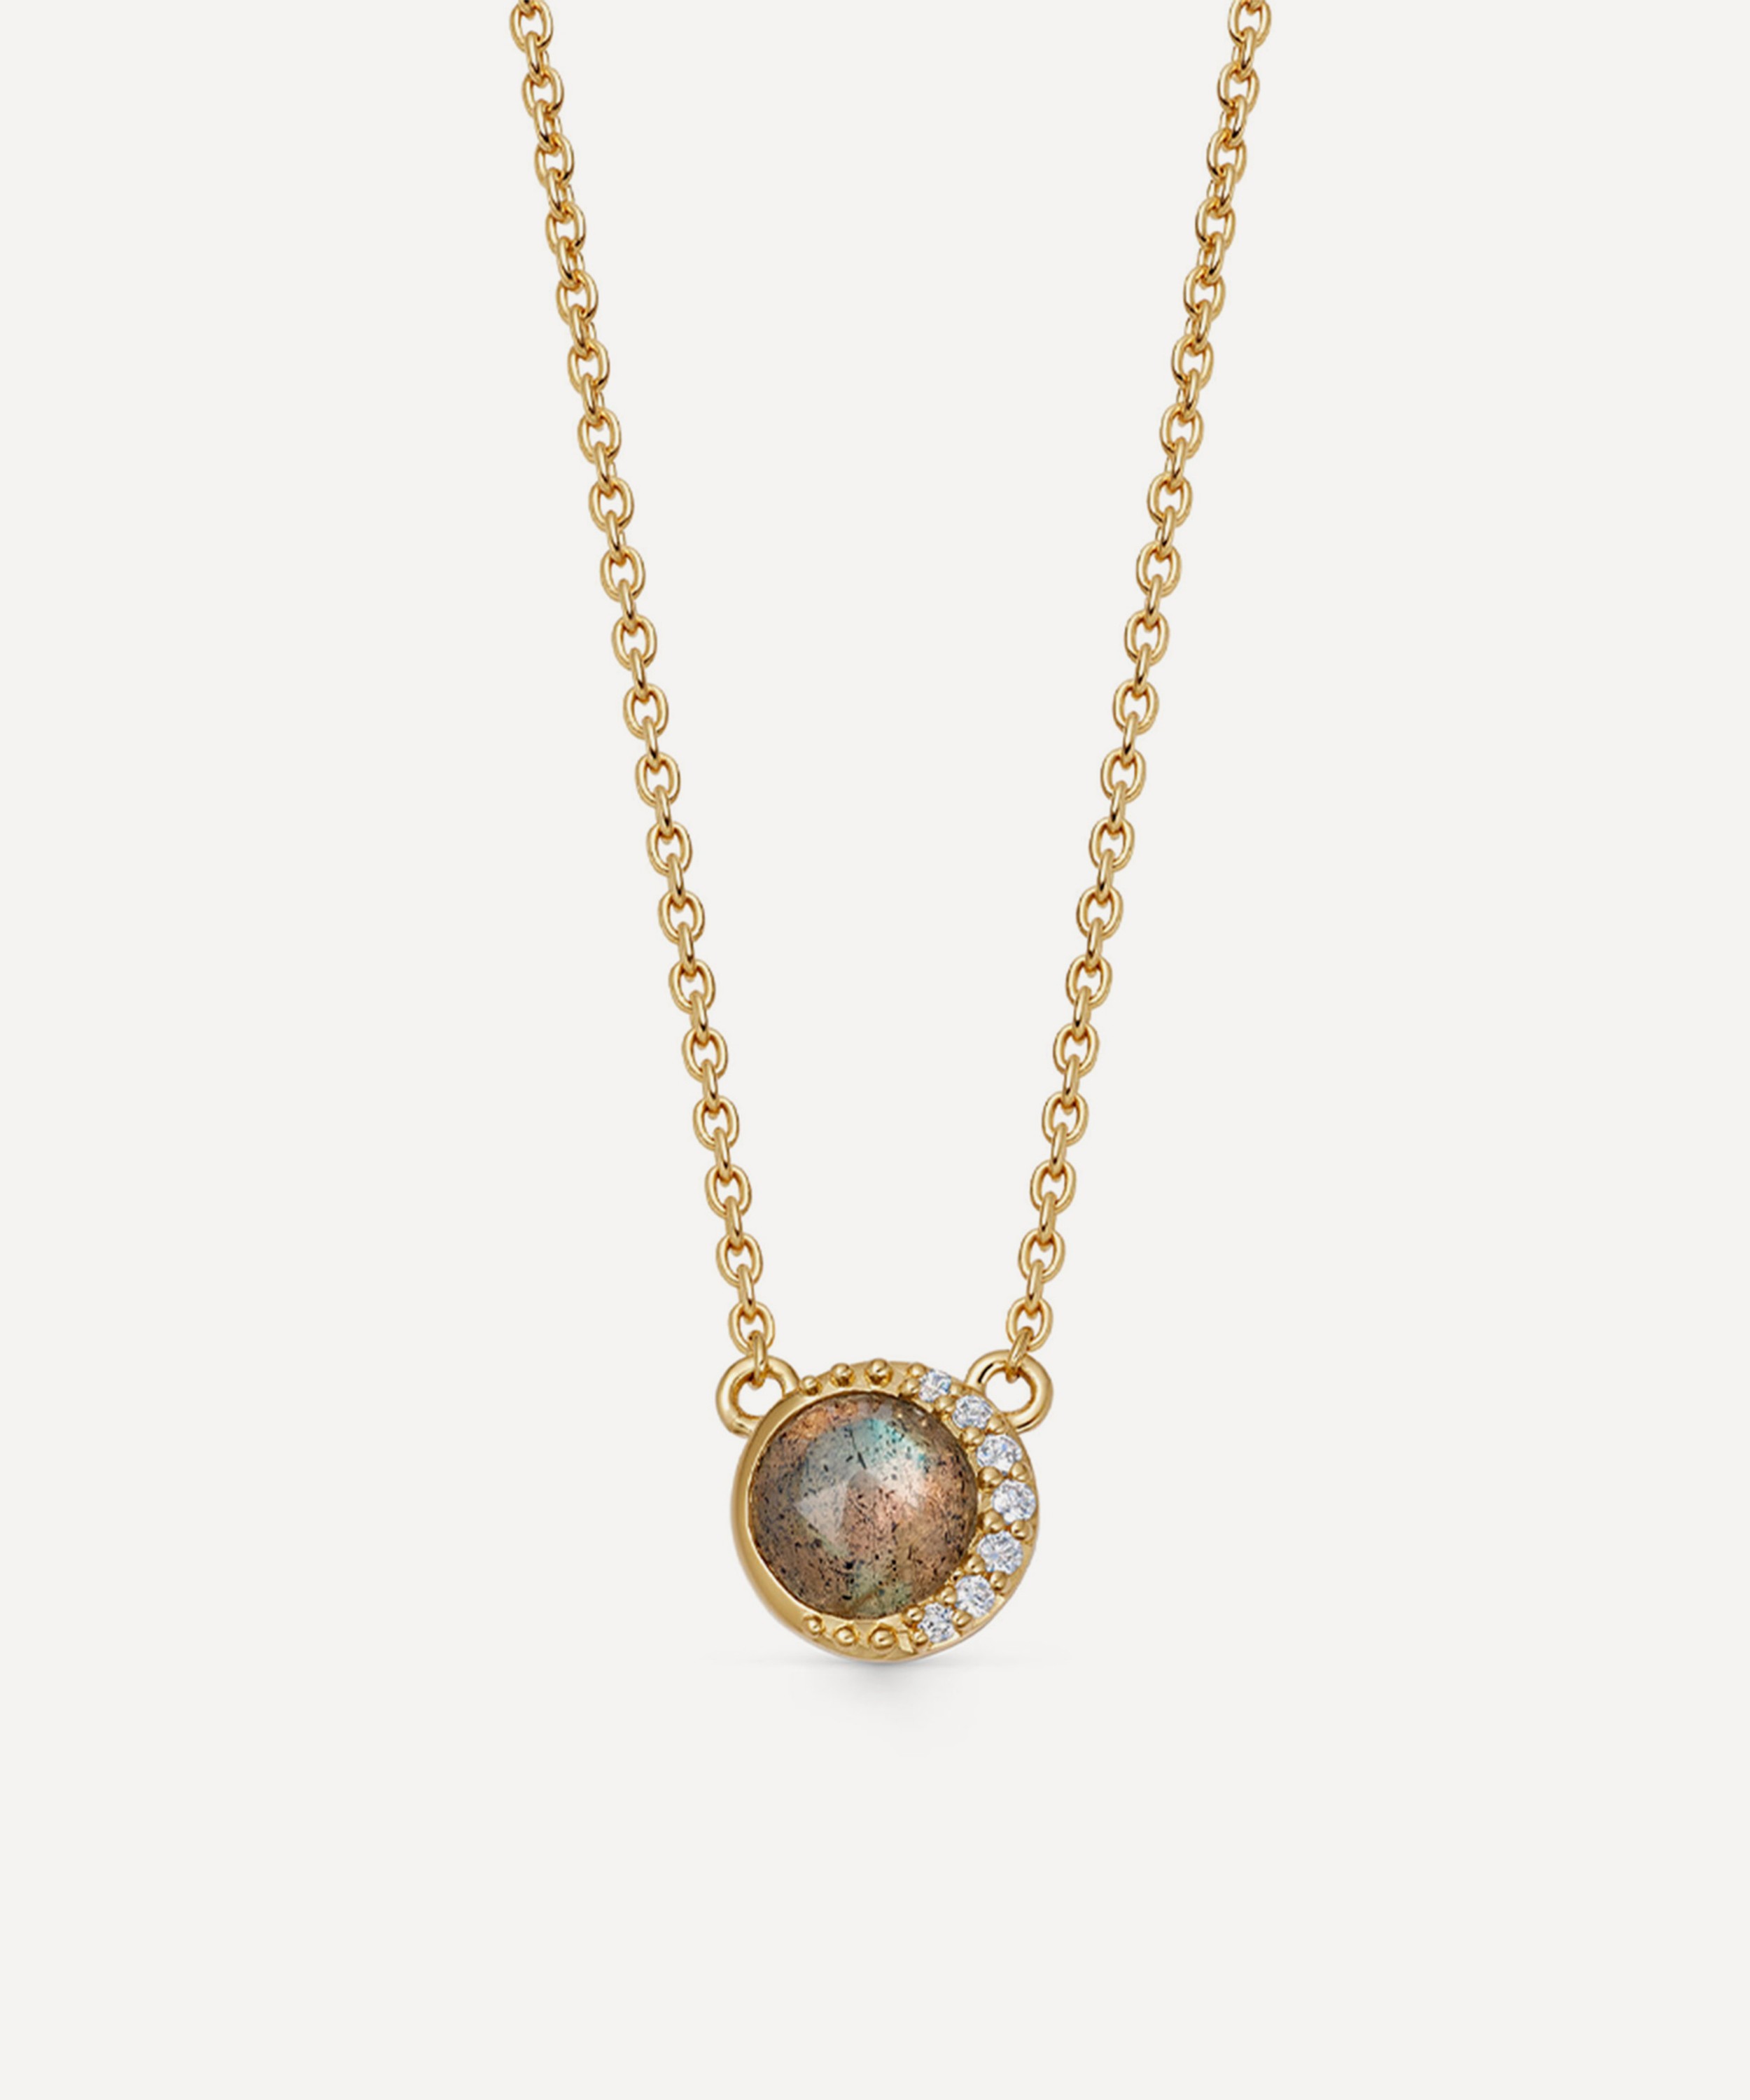 Astley Clarke - 18ct Gold-Plated Vermeil Silver Luna Labradorite Pendant Necklace